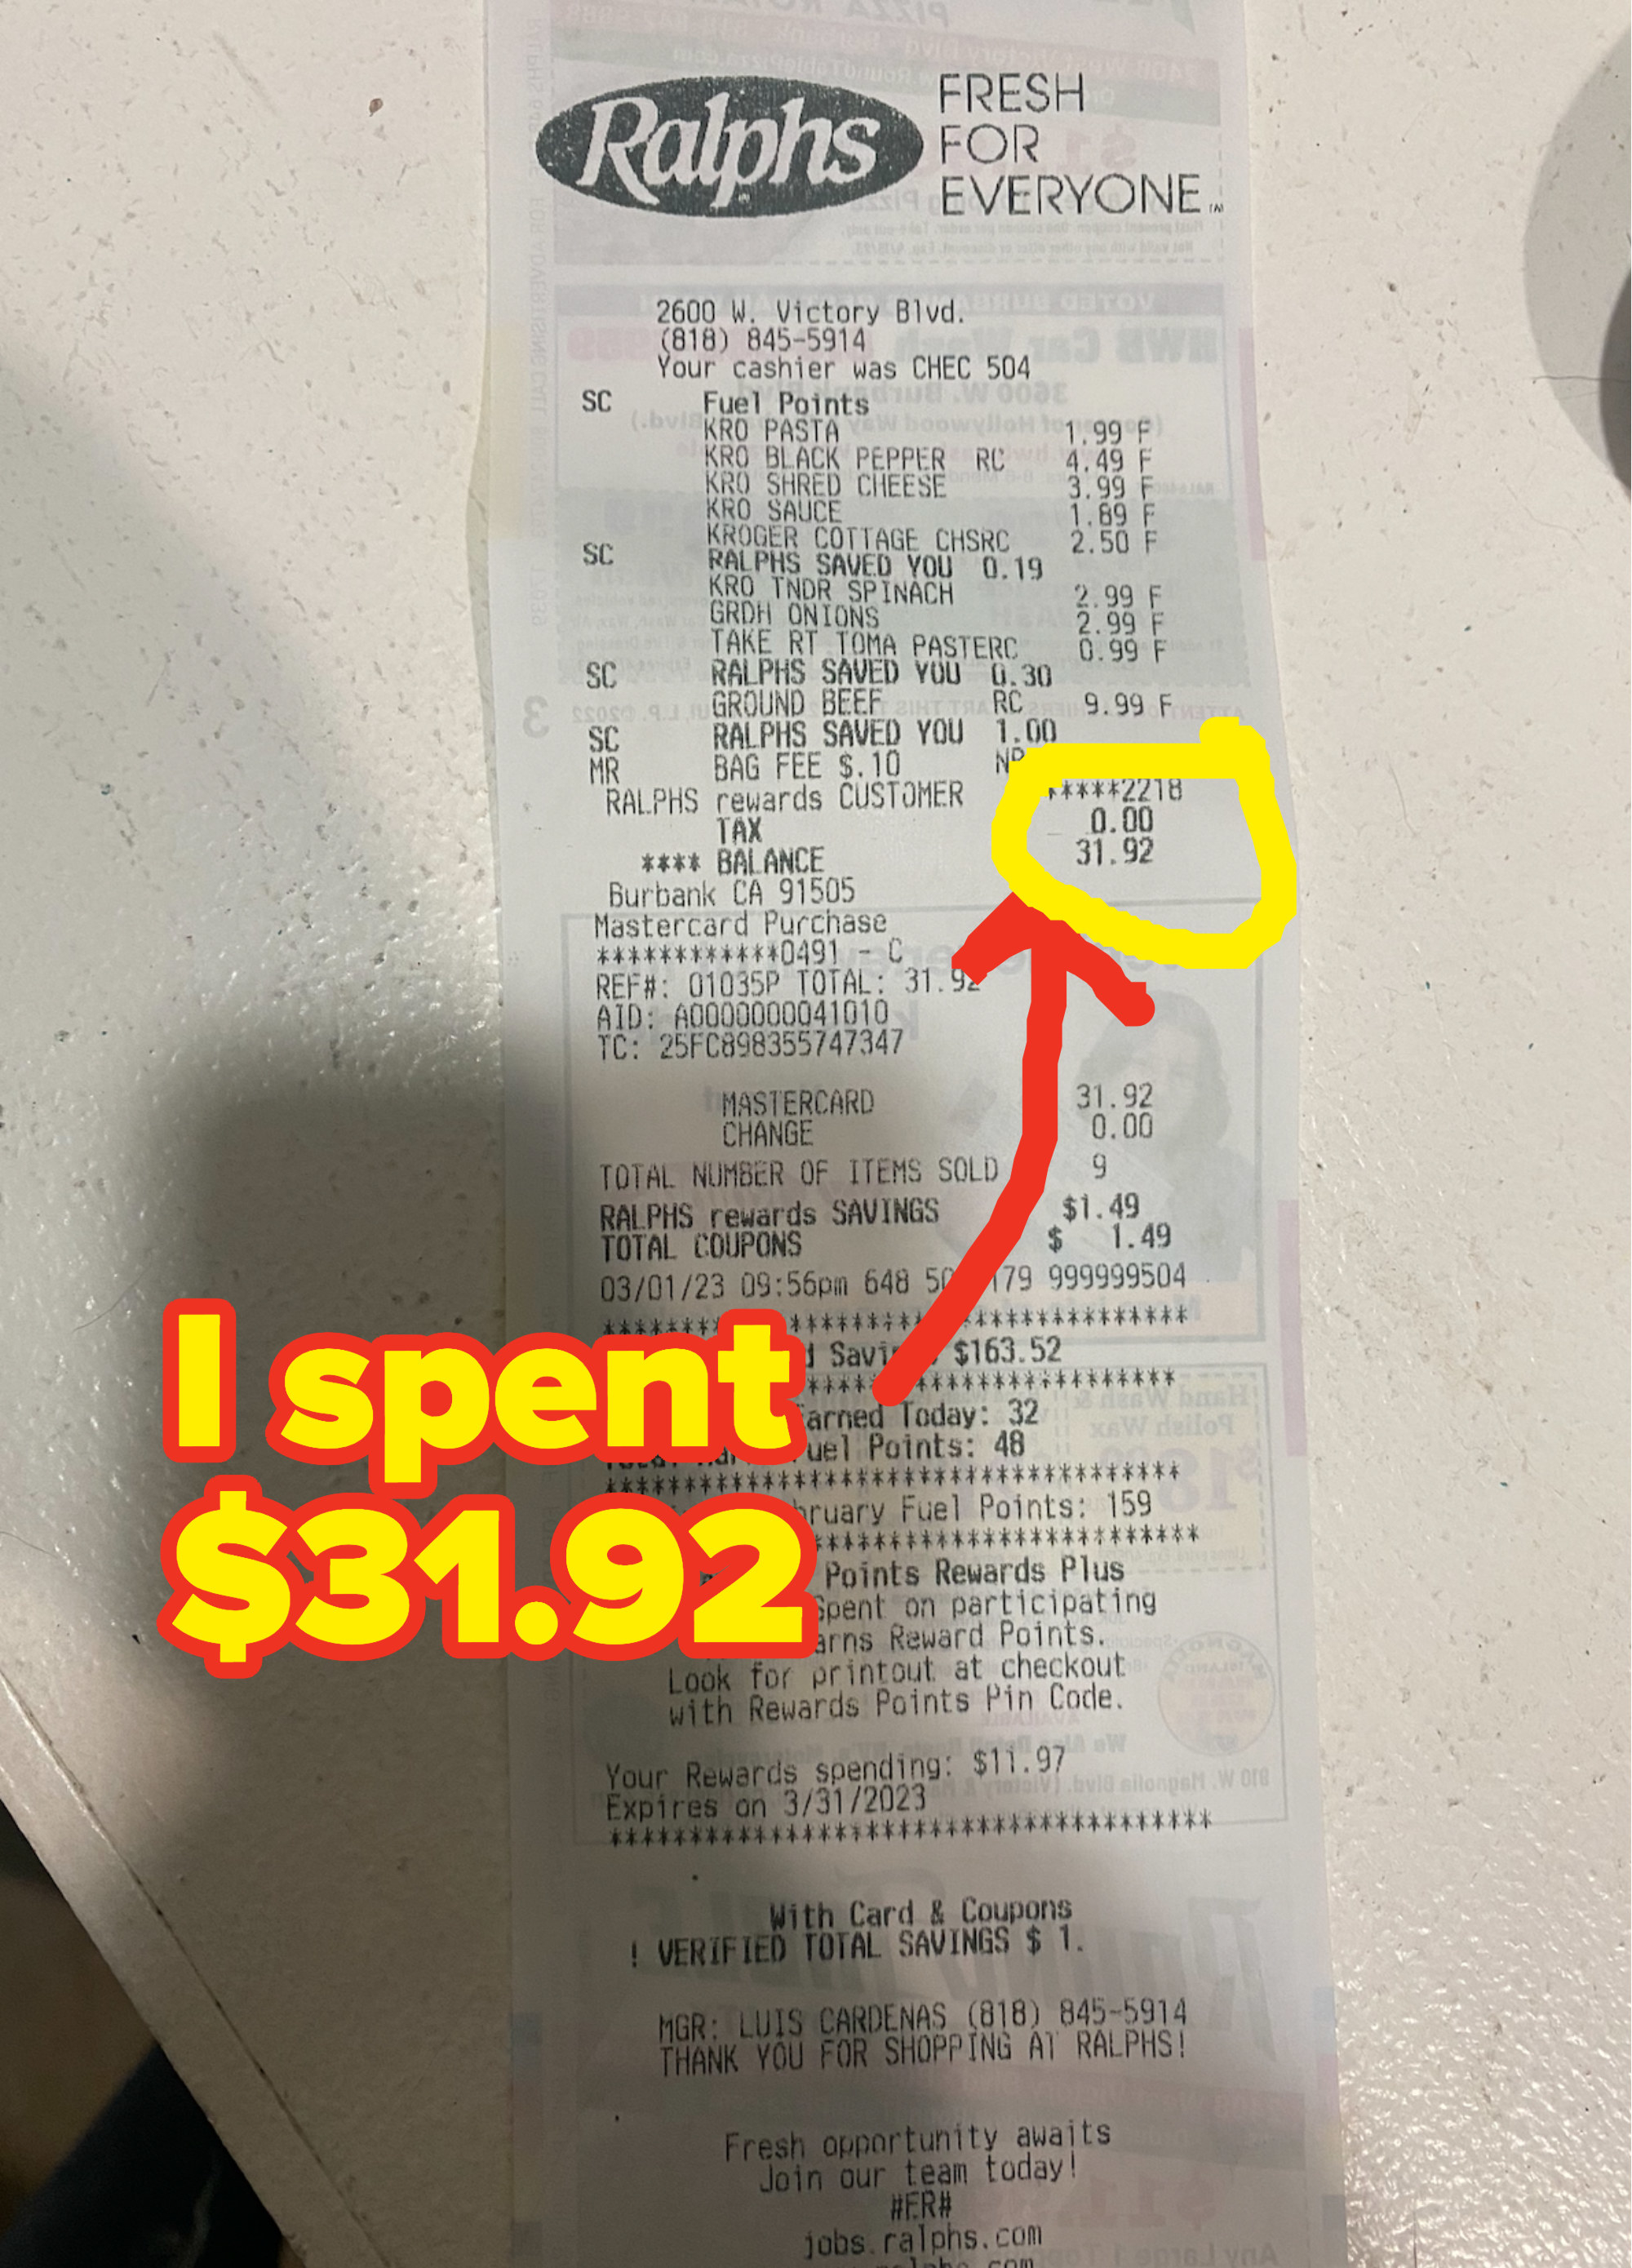 Krista&#x27;s receipt showing she spent $31.92